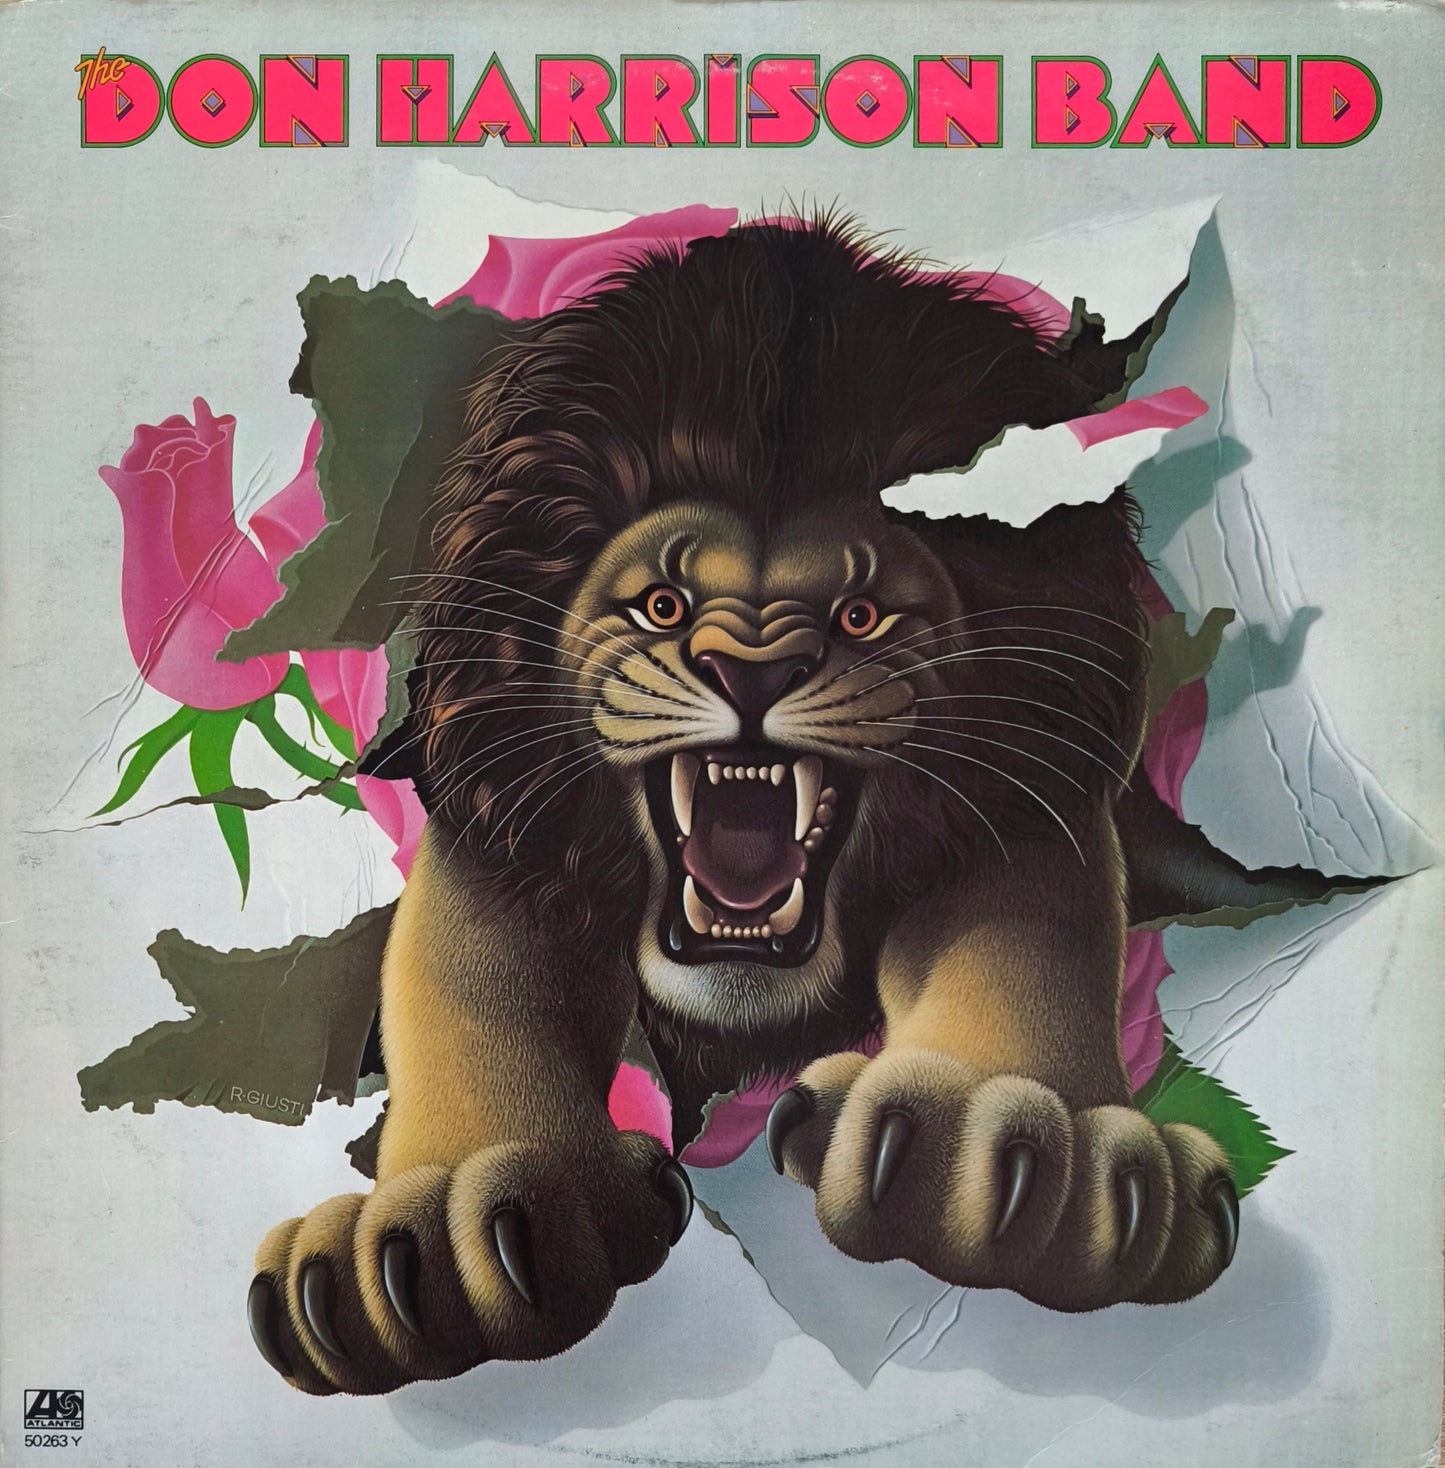 THE DON HARRISON BAND - The Don Harrison Band